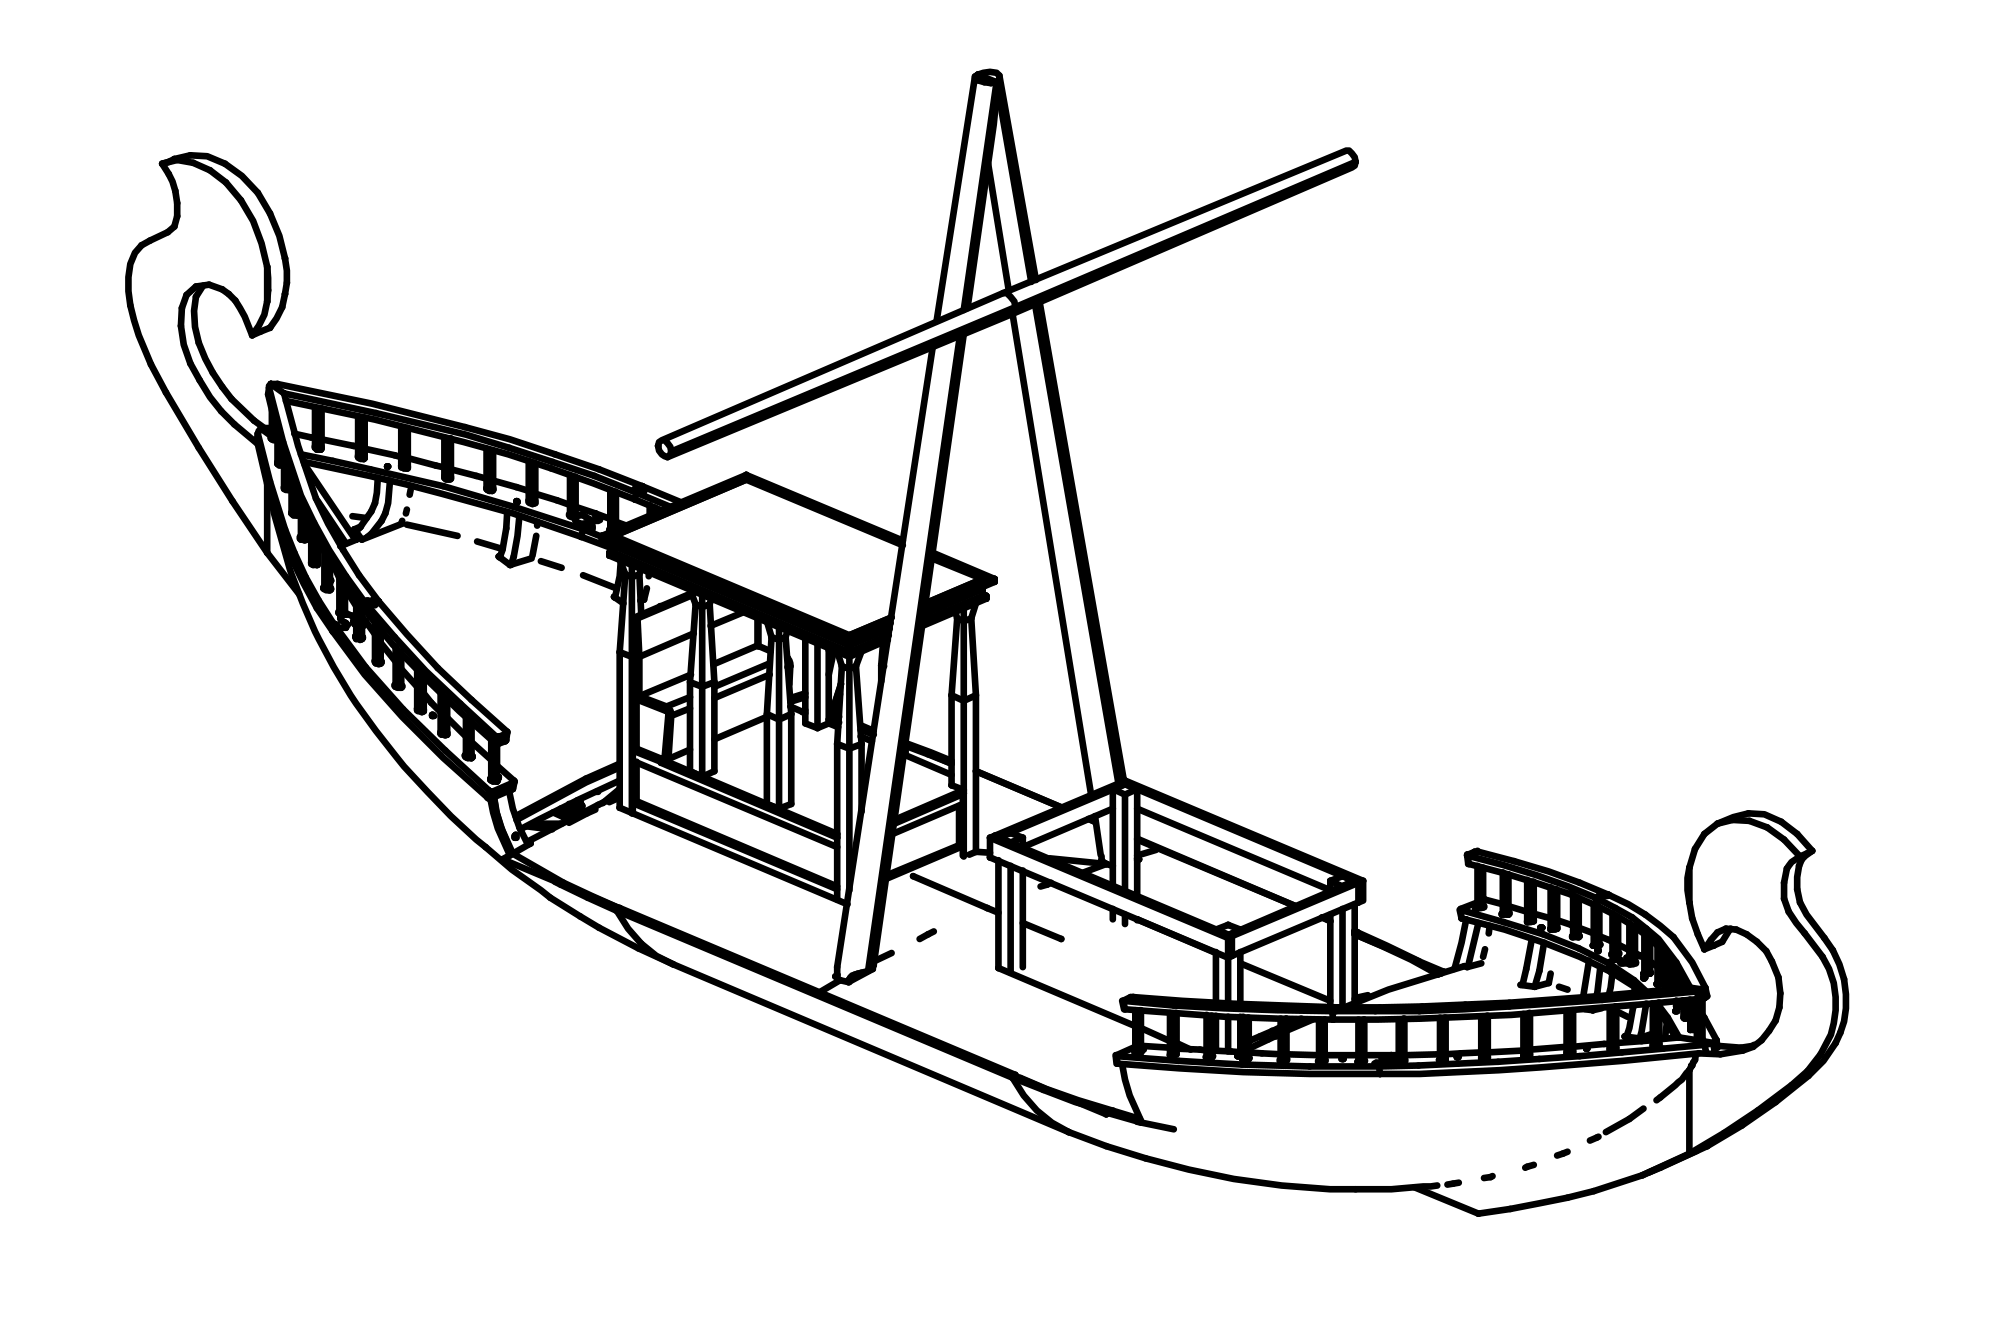 Ship "Nil-Galley"